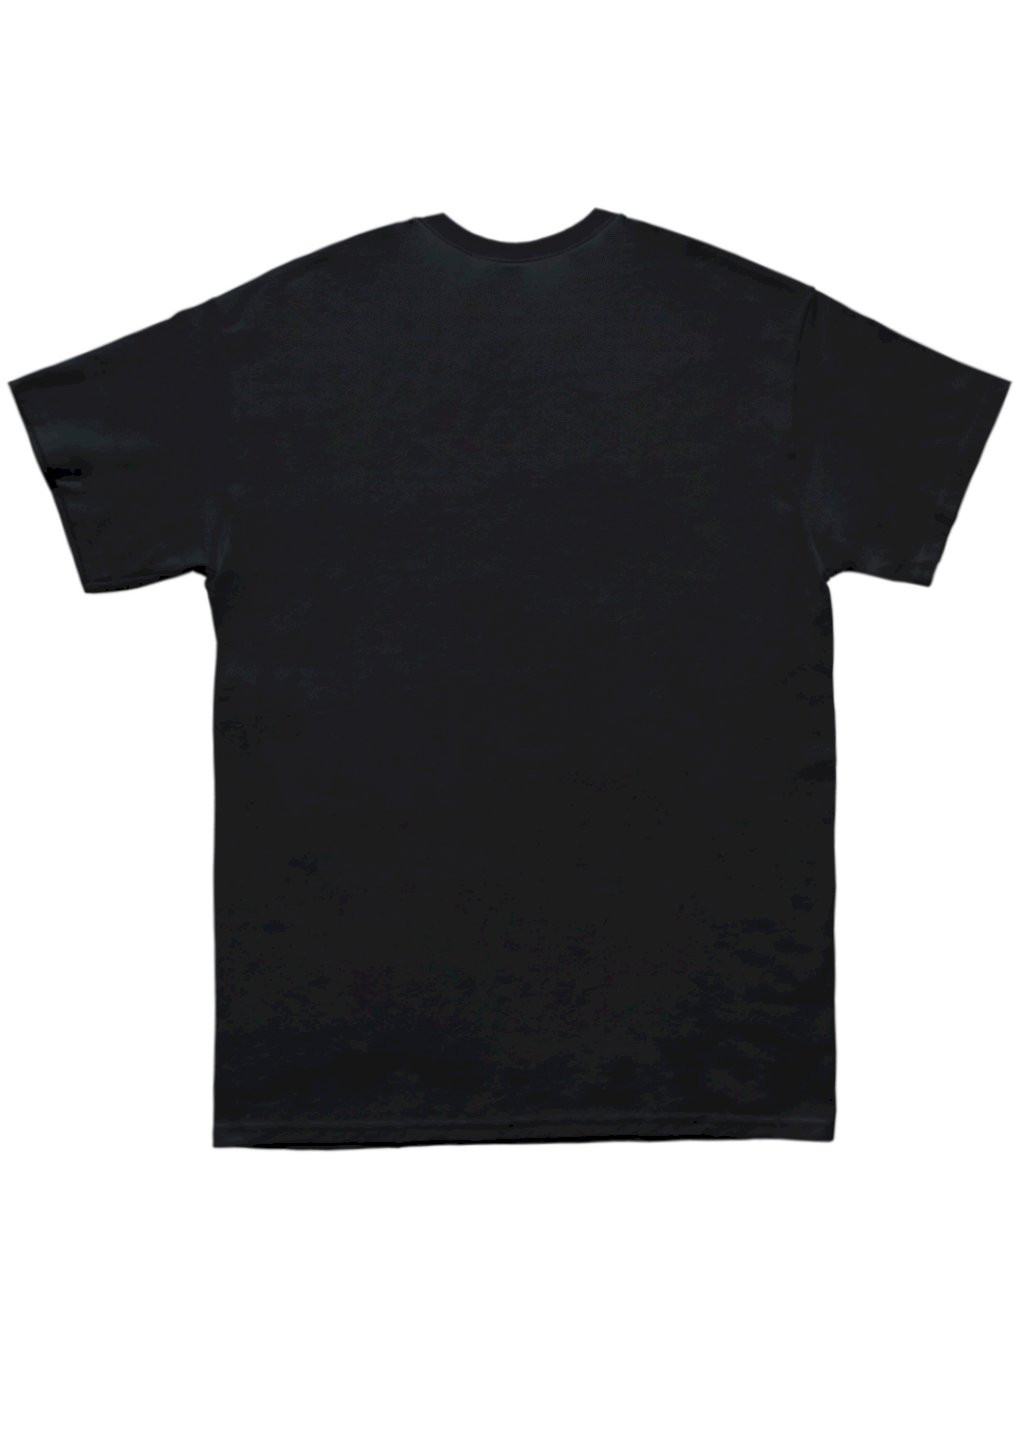 Черная футболка мужская черная "to the moon and back" Trace of Space